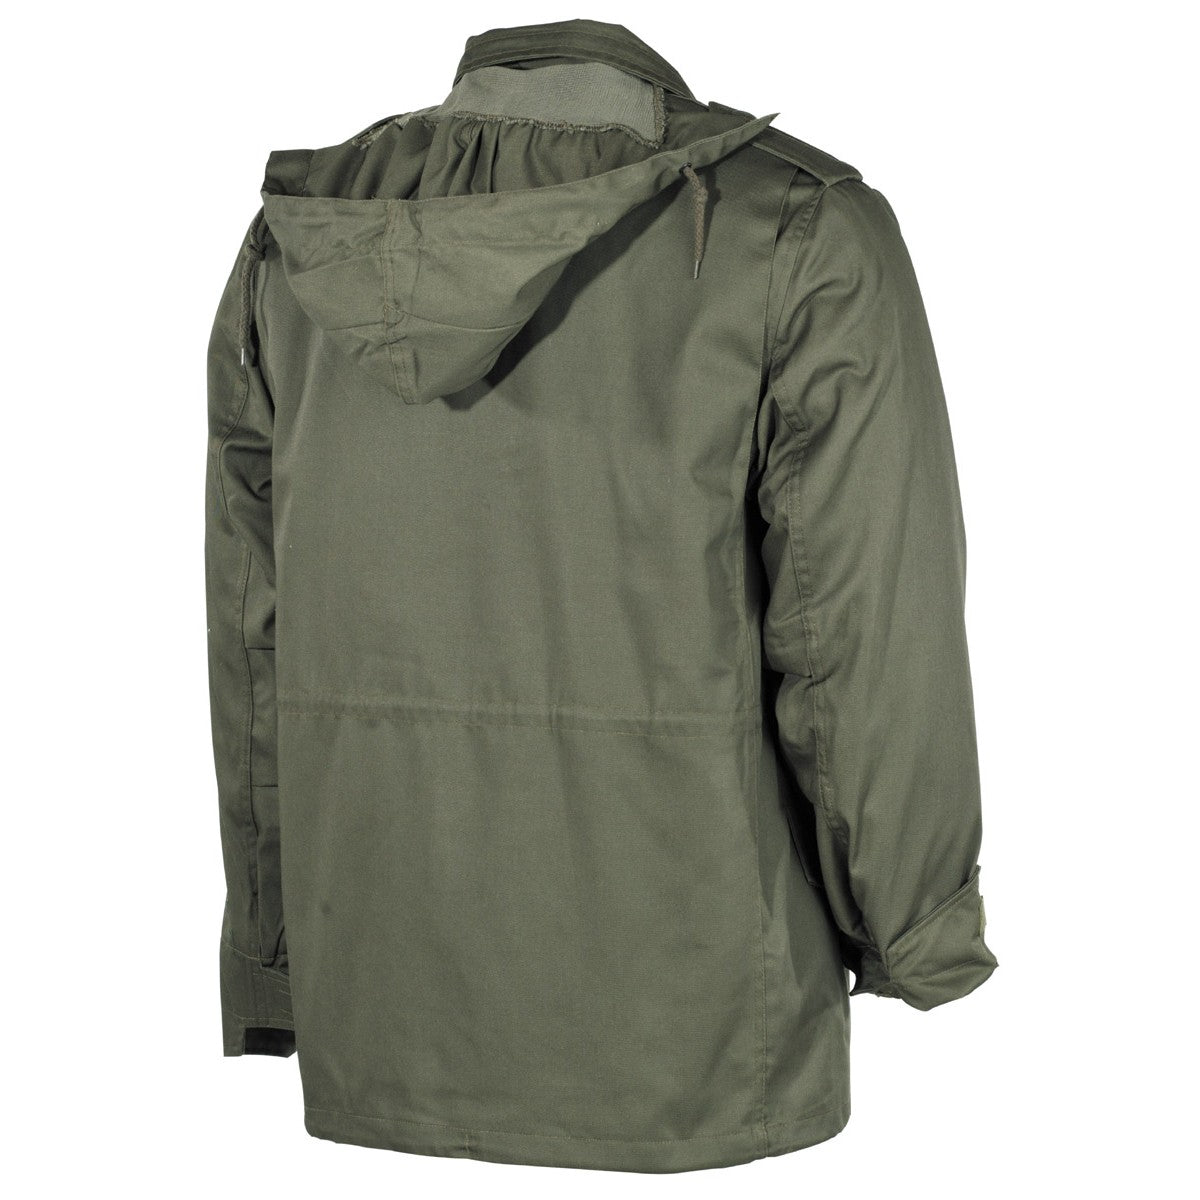 M65 Field Jacket Olive Green US Army Type – MilitaryMart